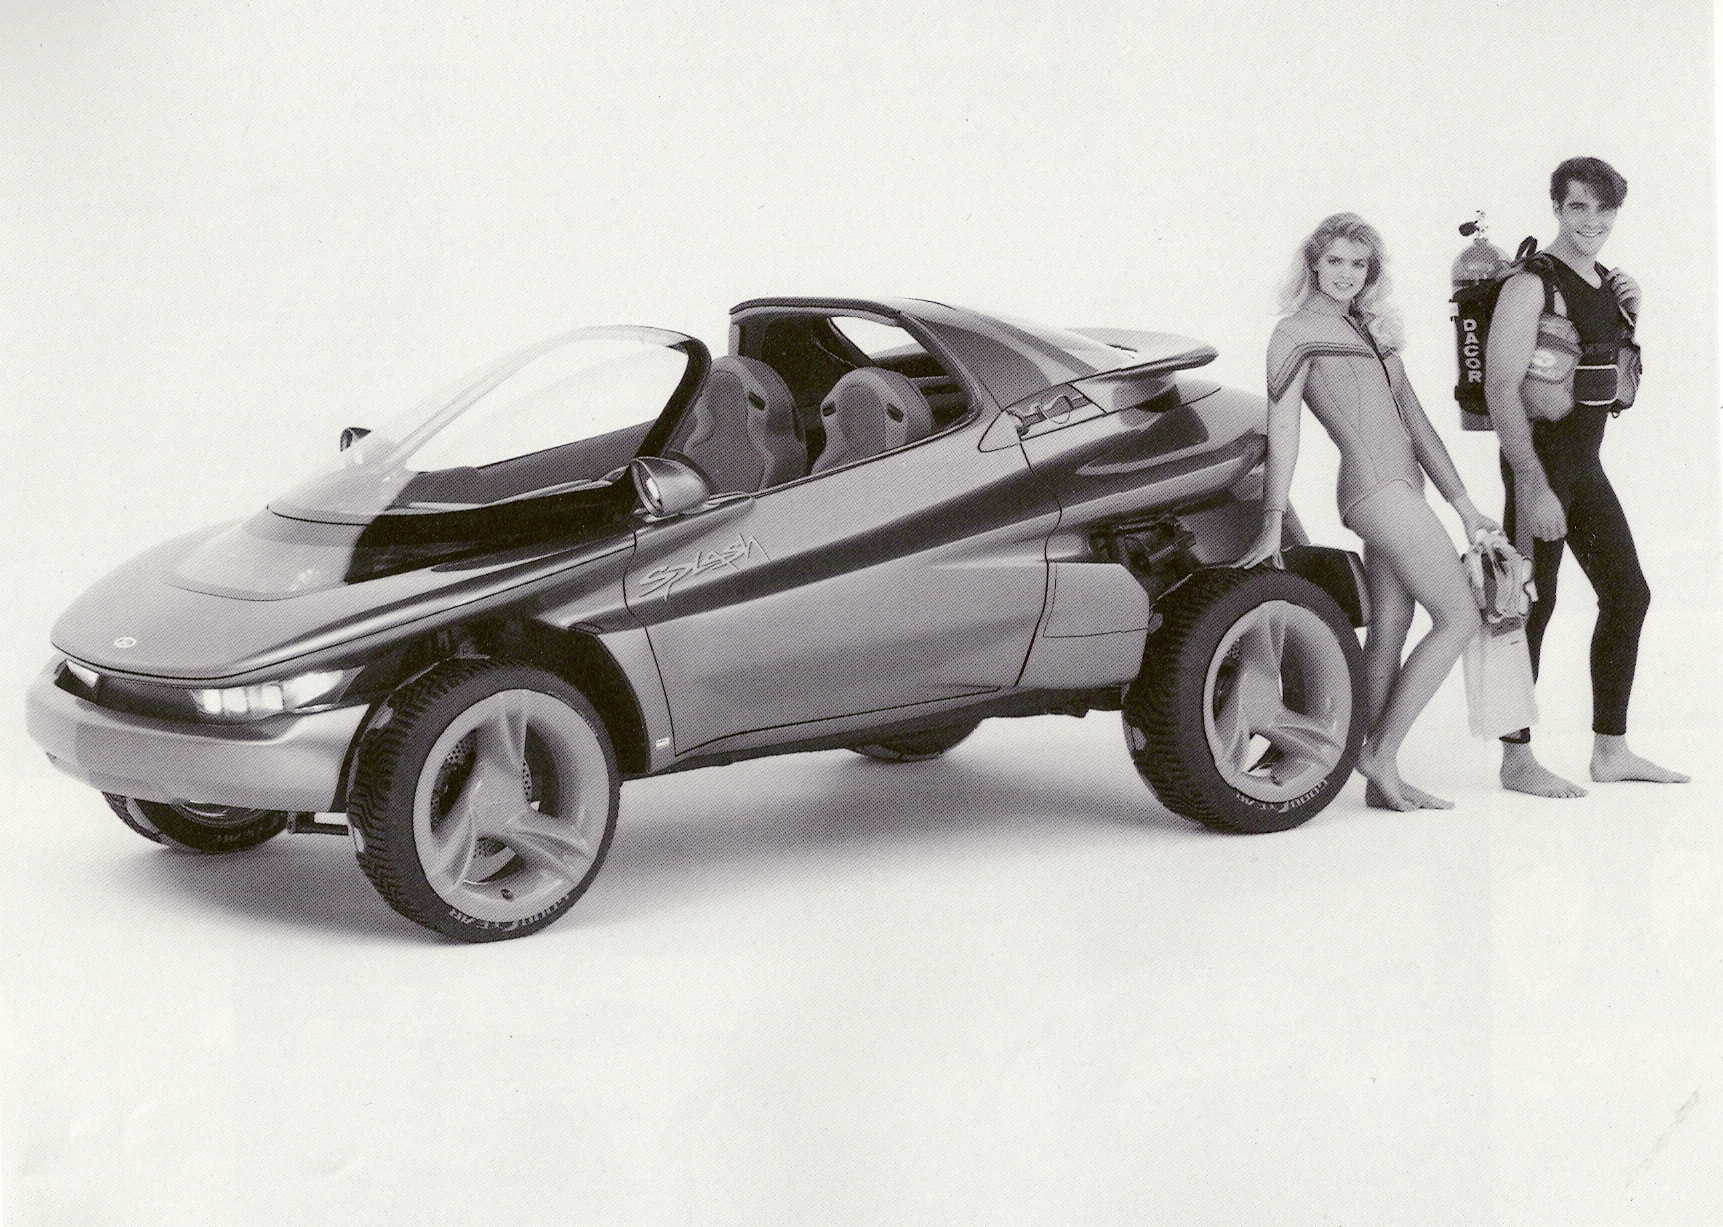 Ford Splash Concept, 1988